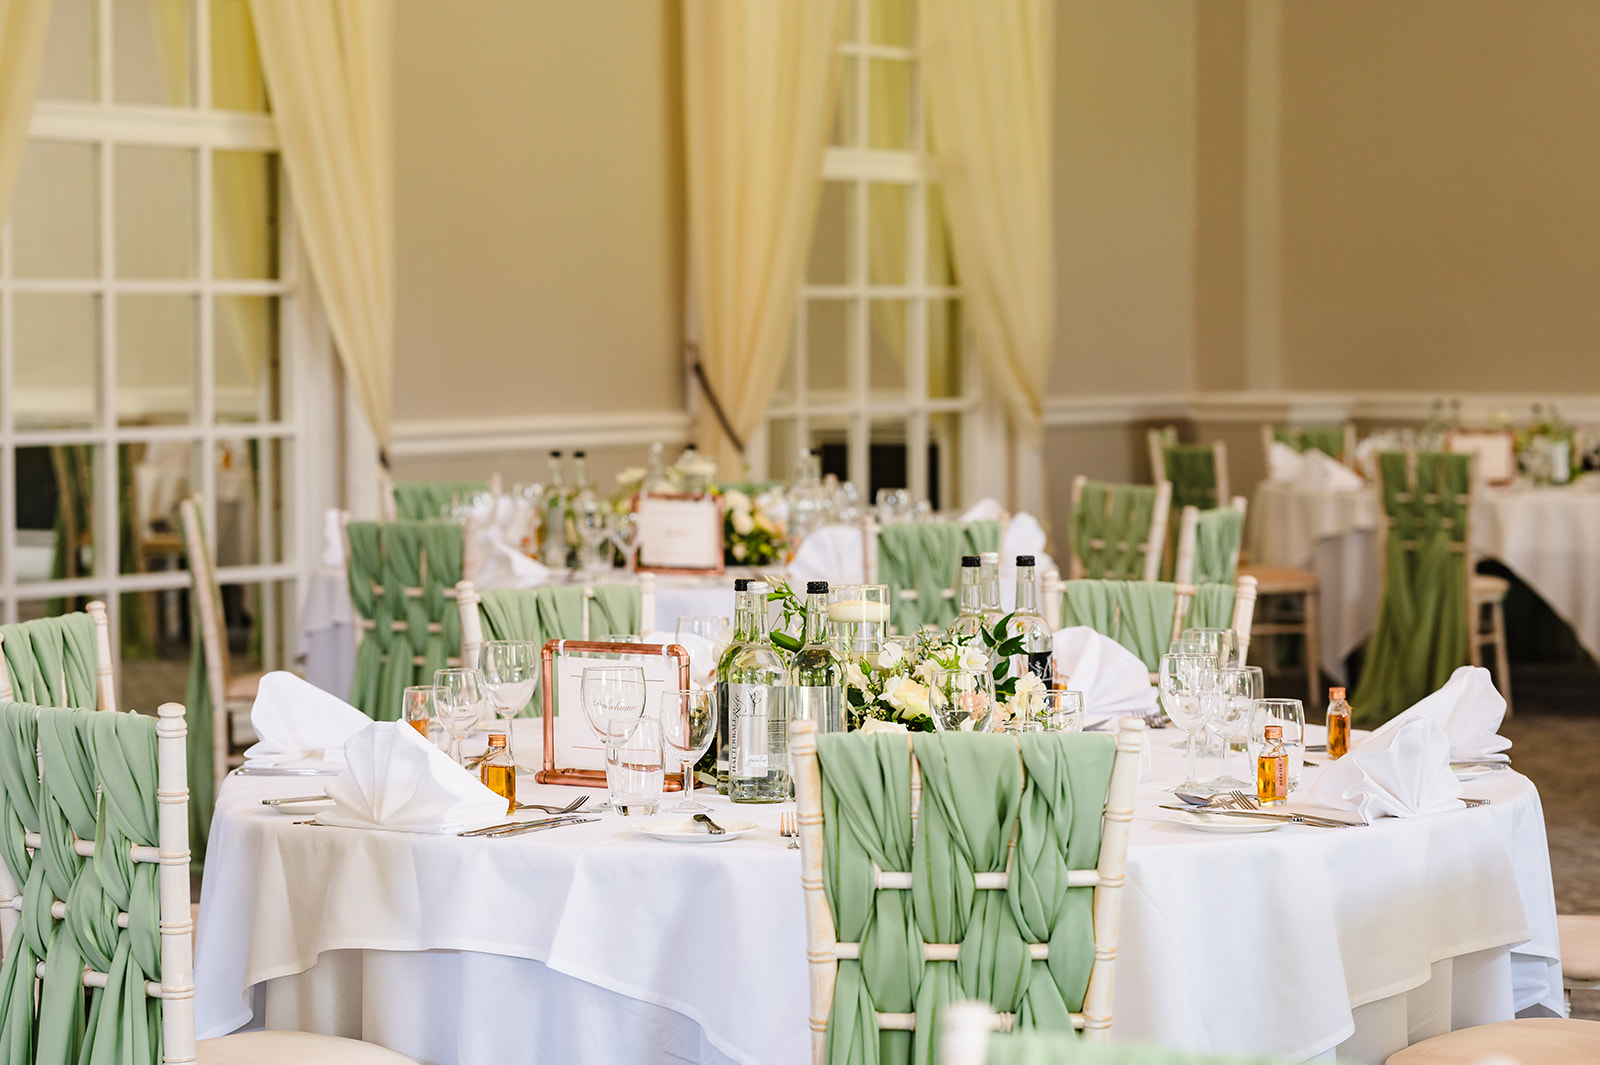 sage green chare sashes tastefully decorate stapleford park hotels ballroom